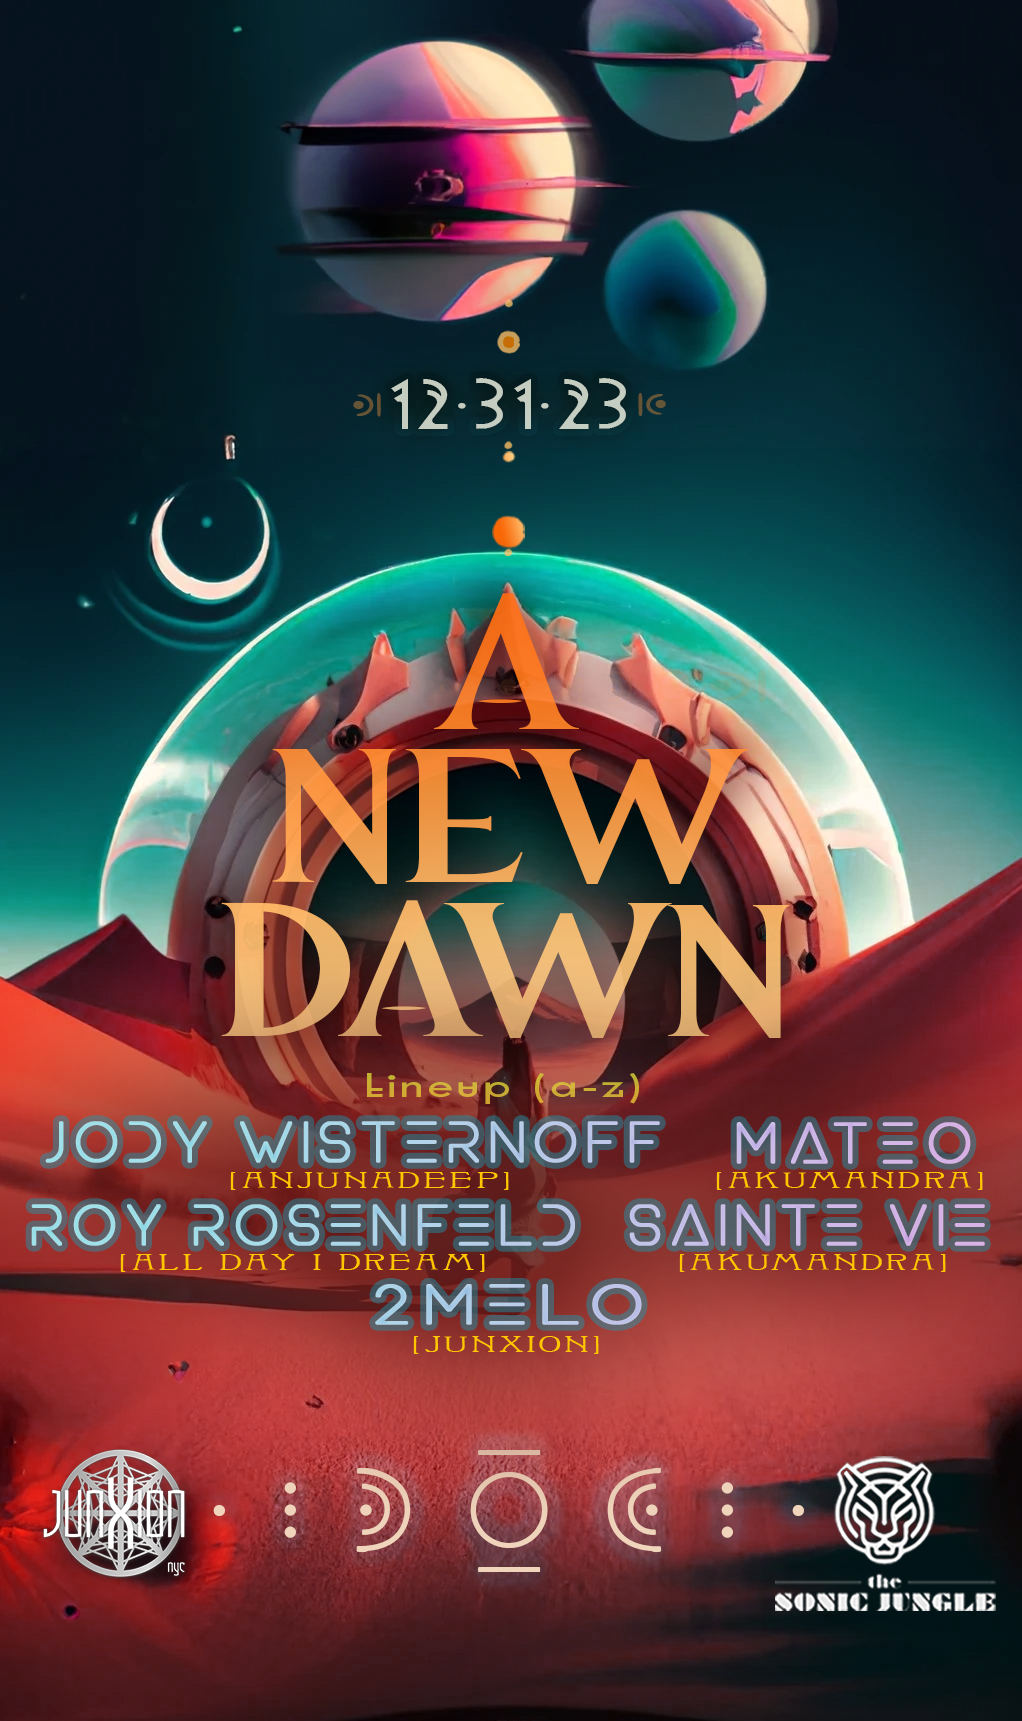 A New Dawn: Sainte Vie, Jody Wisternoff, Roy Rosenfeld - フライヤー表